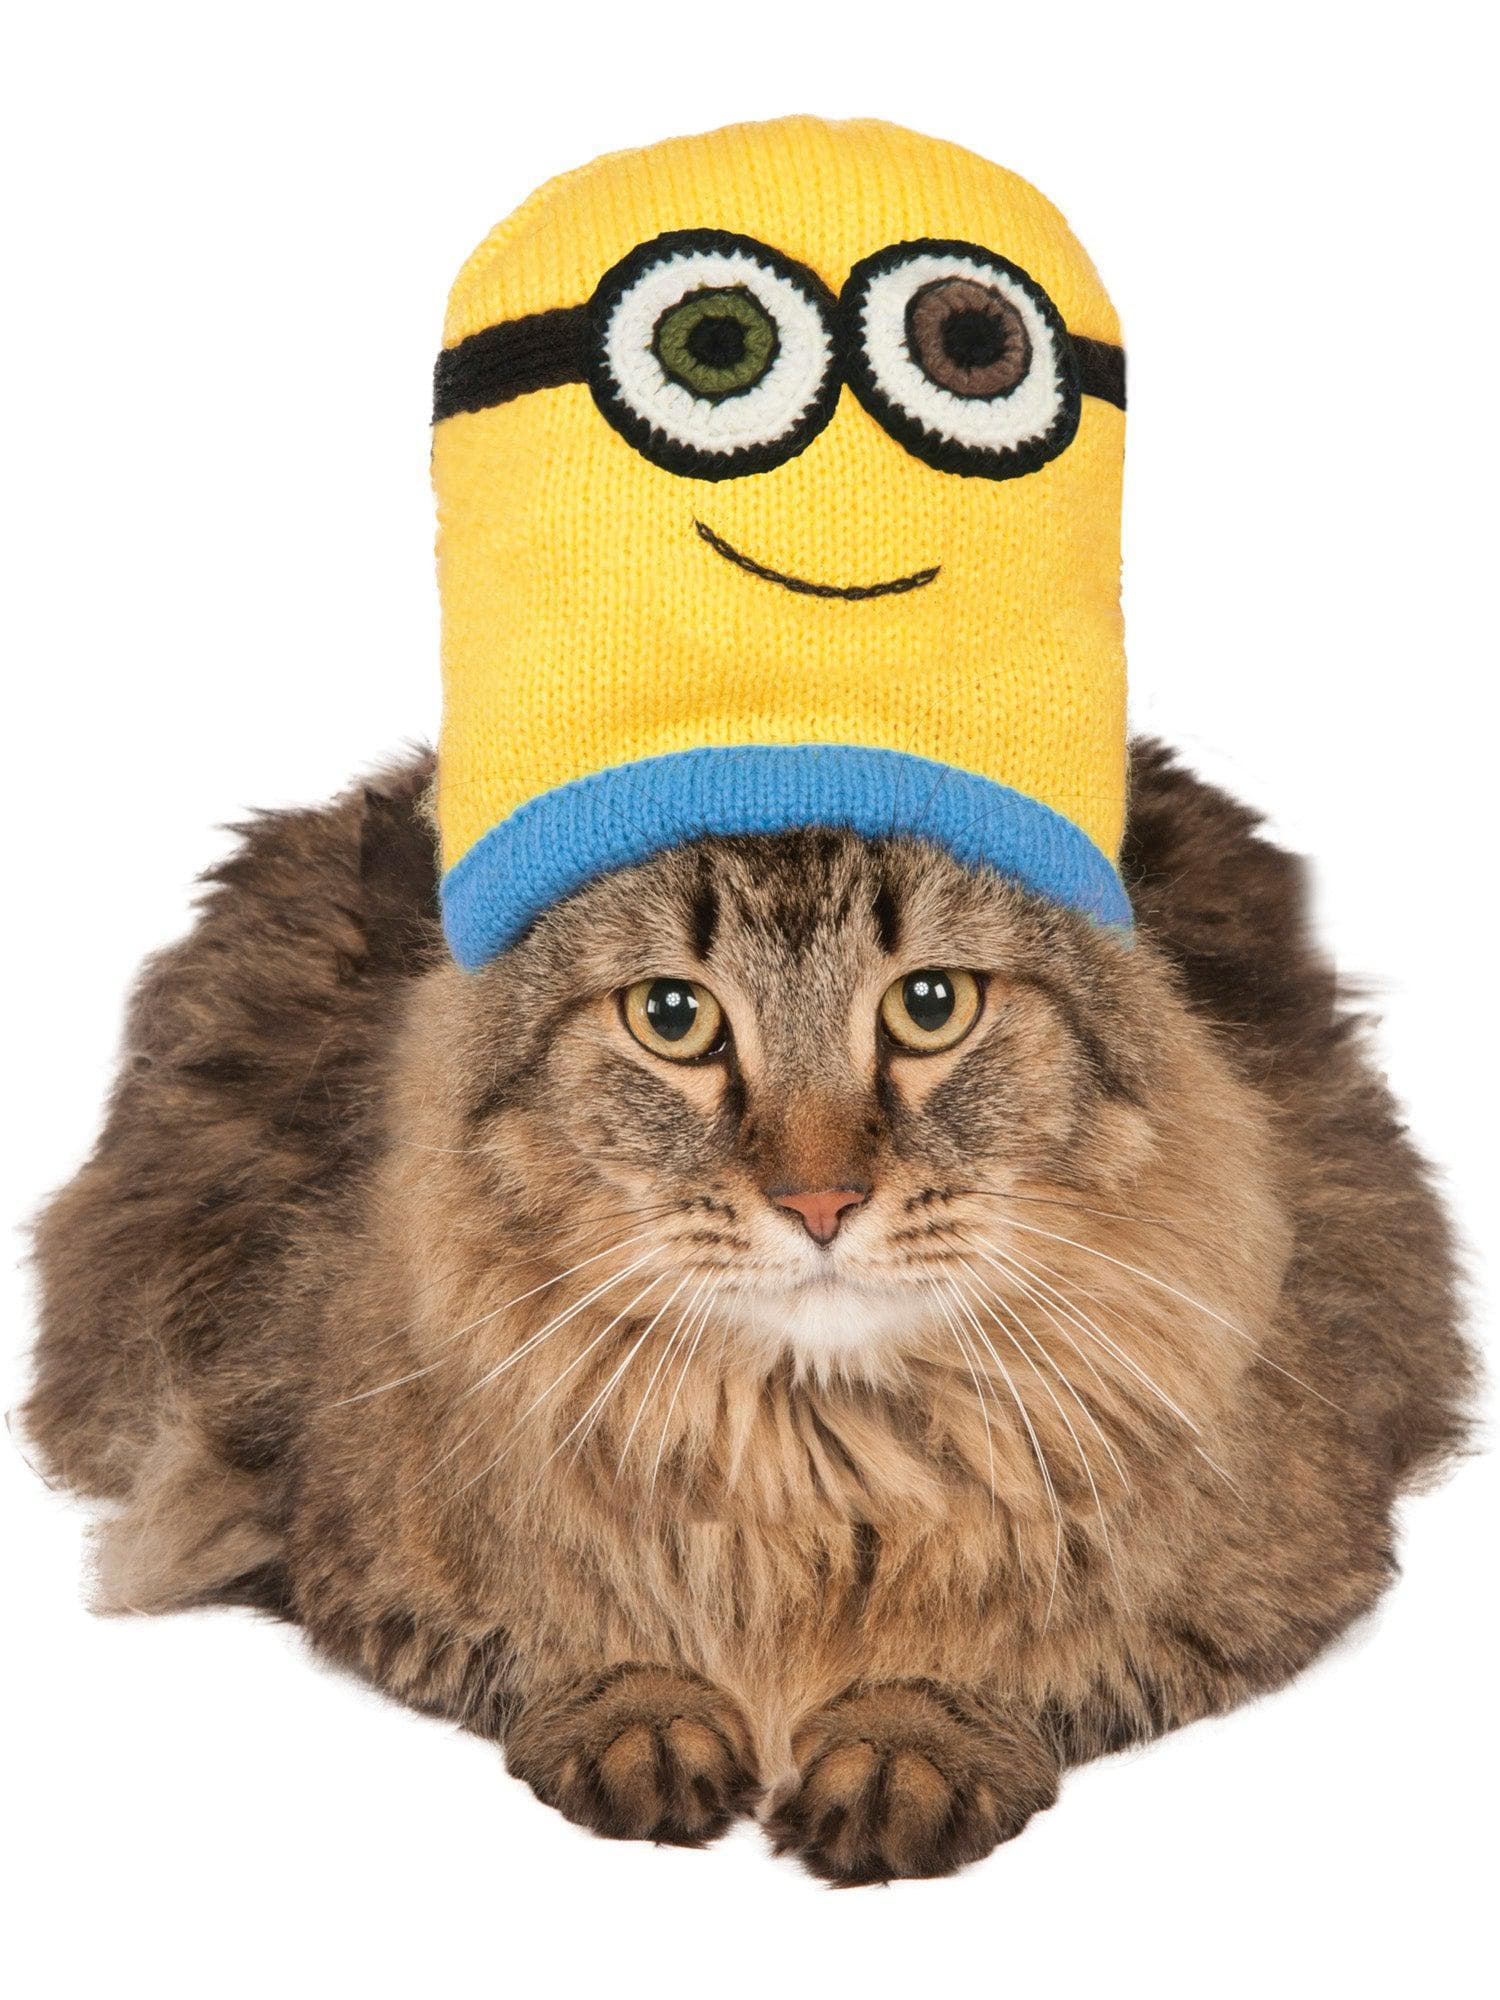 Minions Bob Knit Headpiece Pet Costume - costumes.com